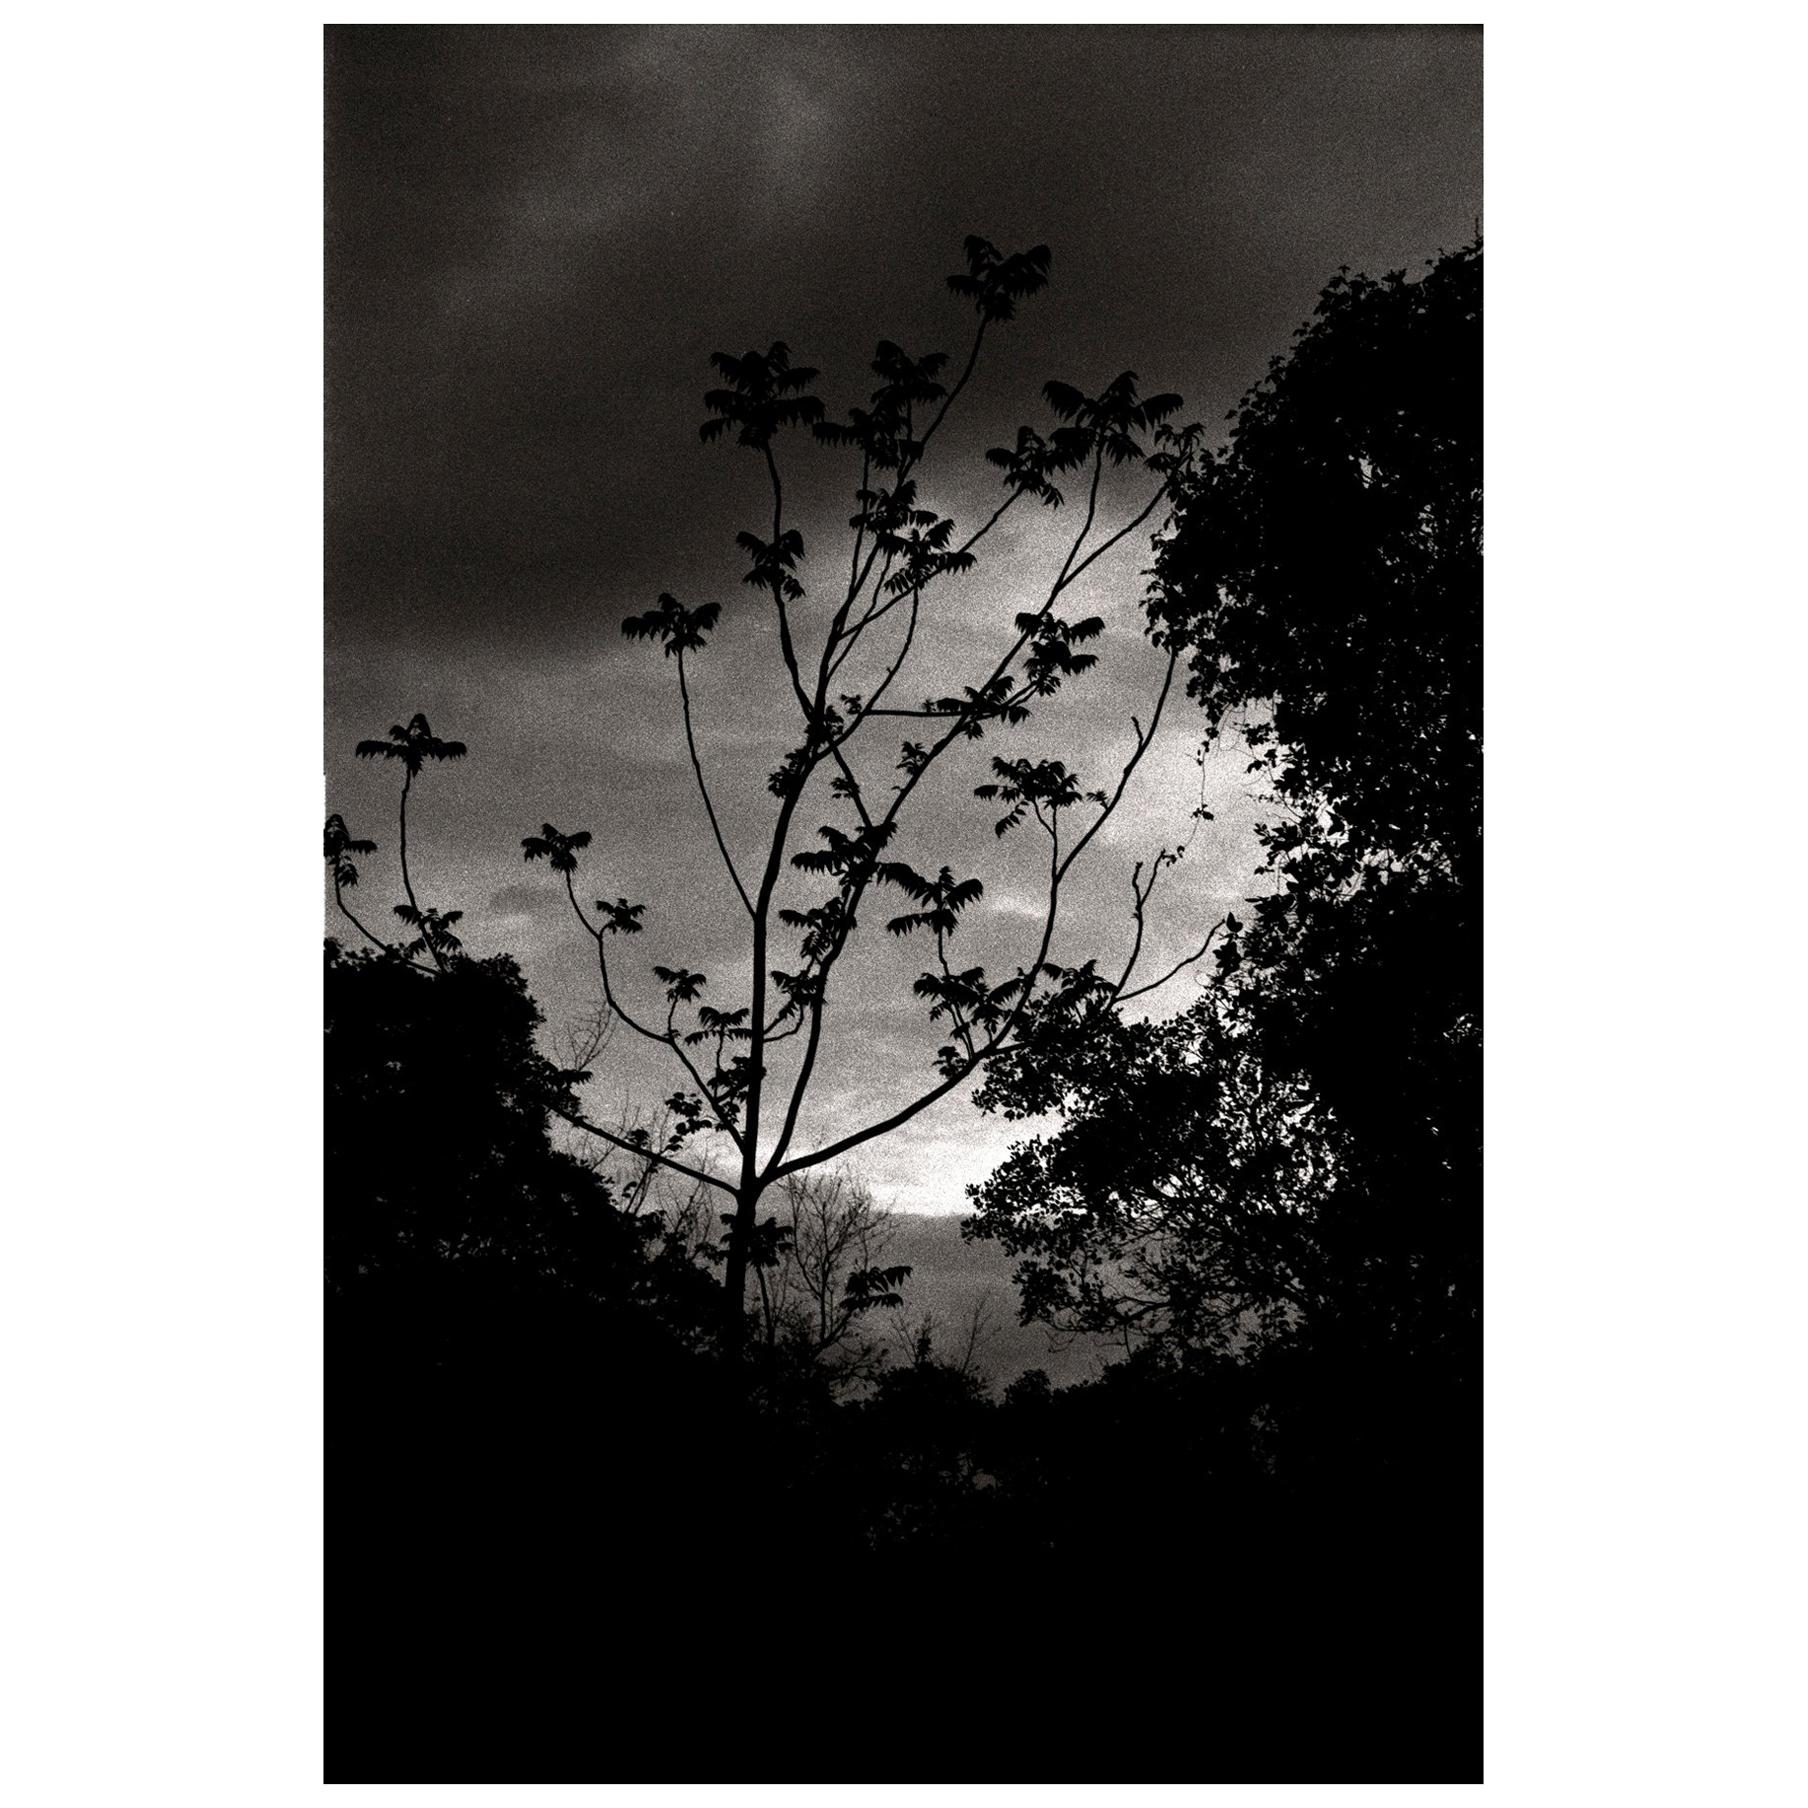 "Nightfall" Black & White Photography Gelatin Silver Print by Ana Maria Cortesão